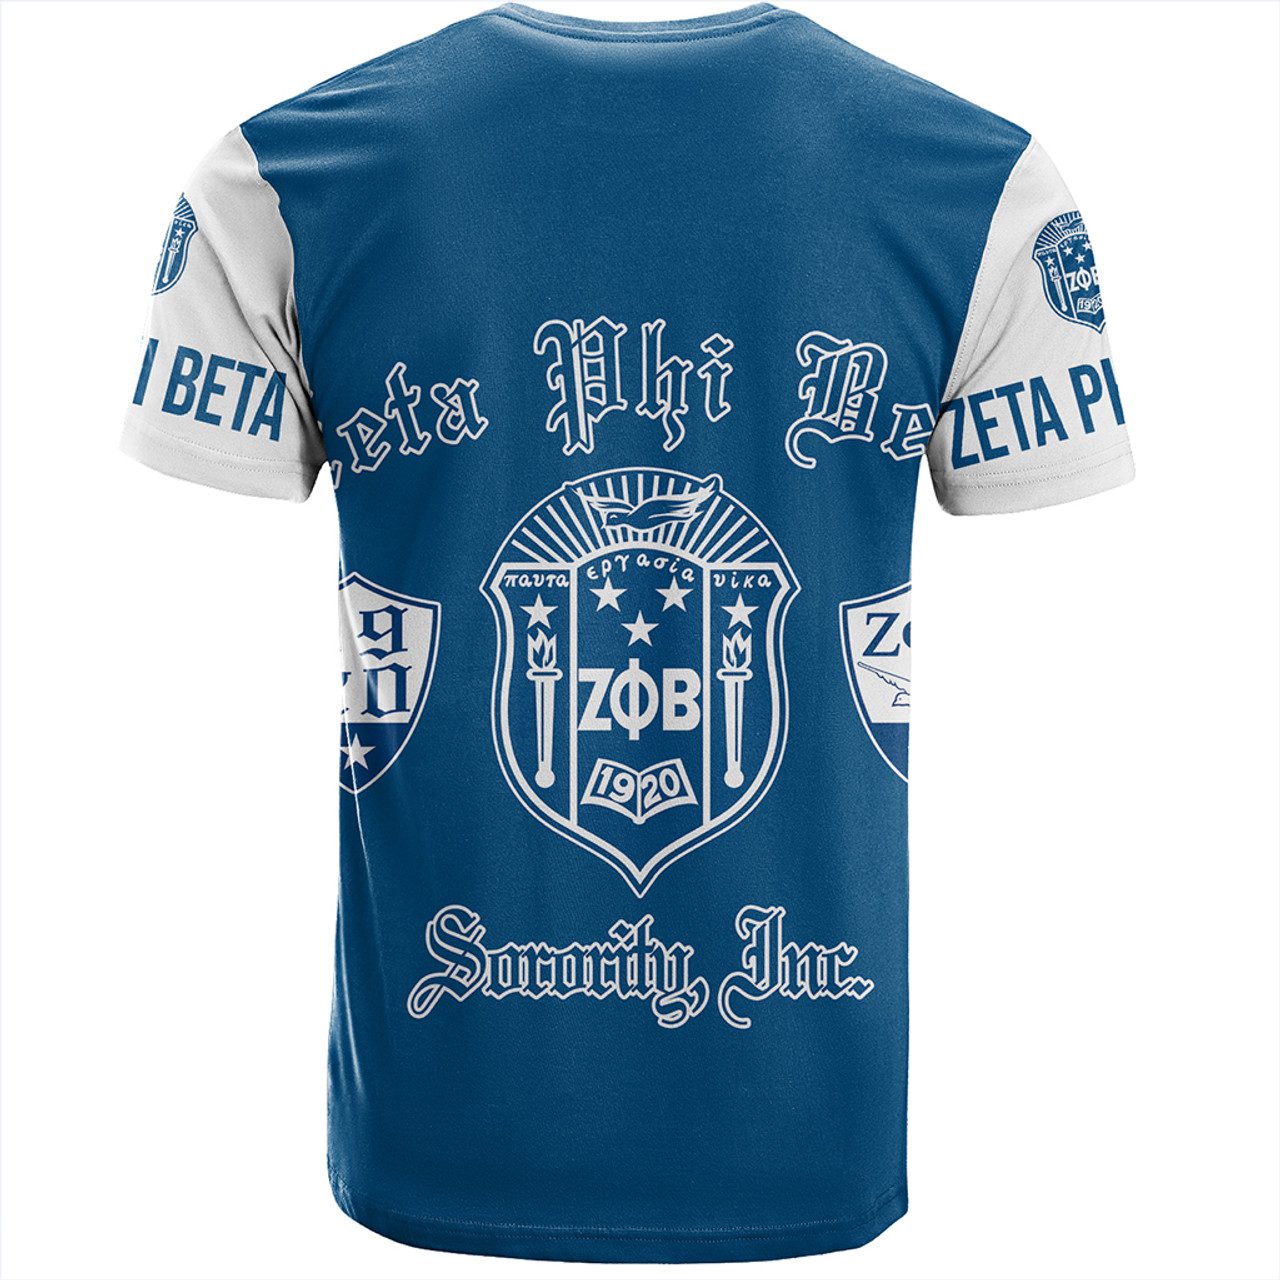 Zeta Phi Beta T-Shirt Lux Sisterhood